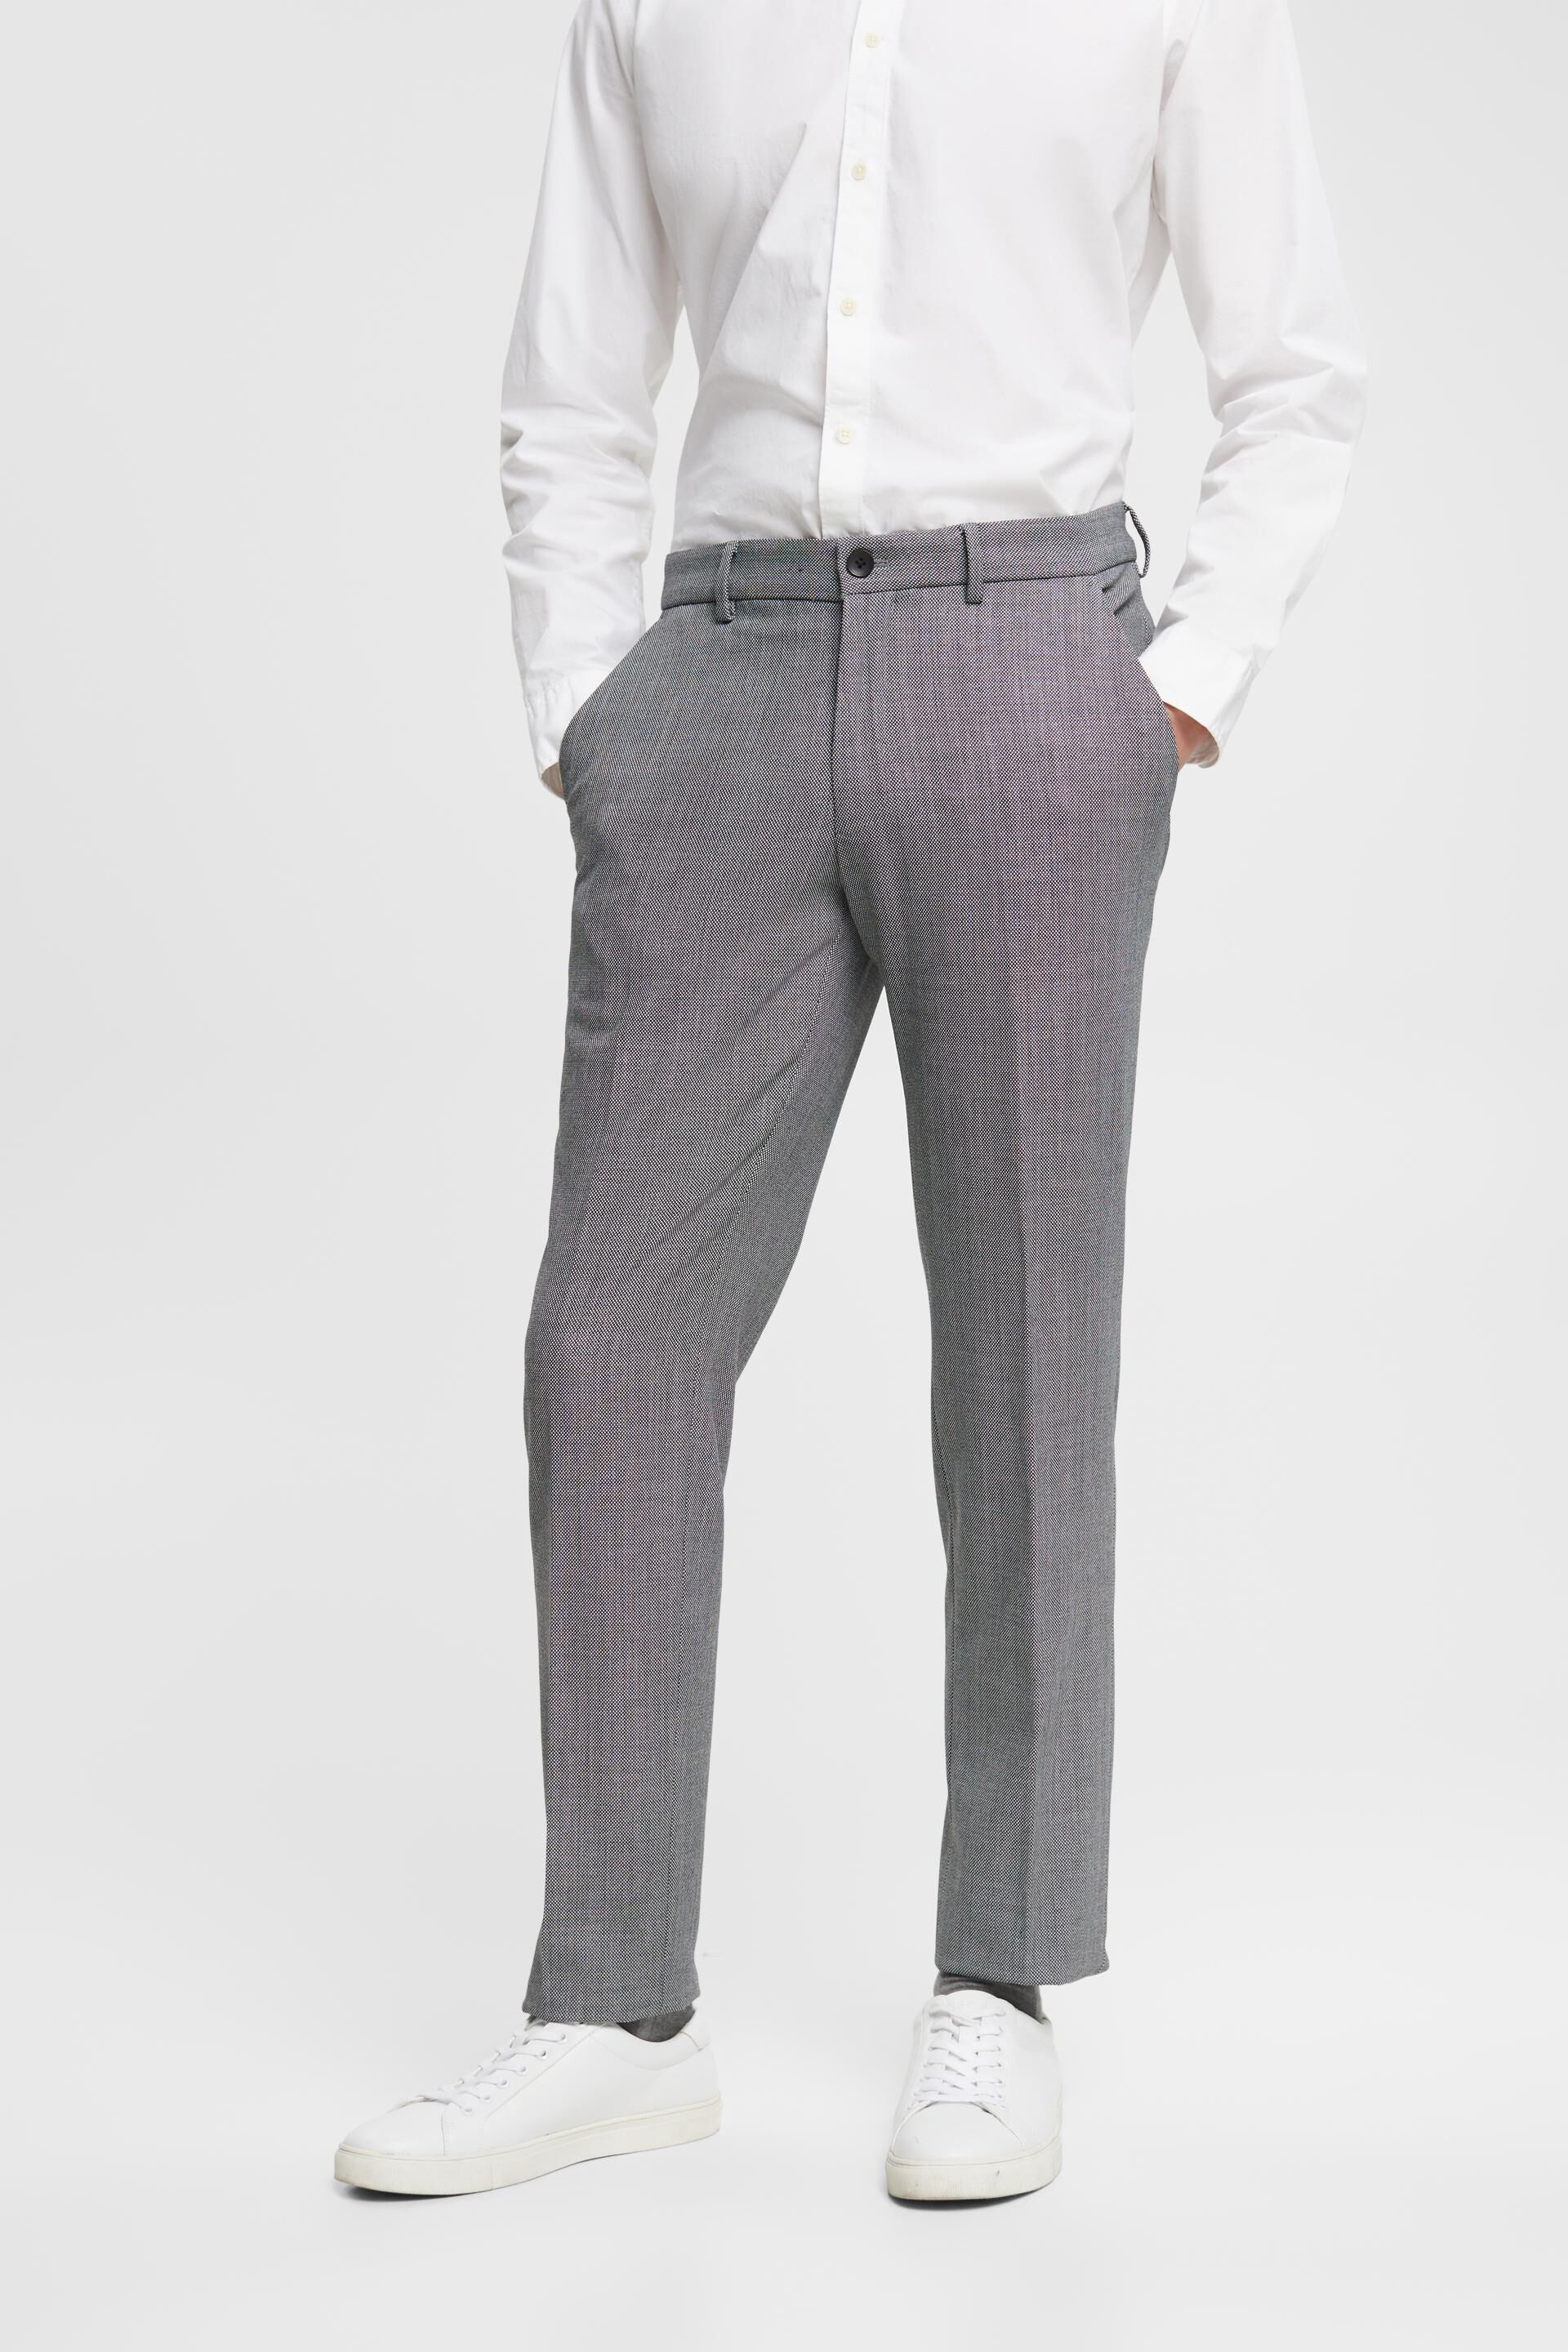 Esprit Match: Bird's & suit Mix trousers eye